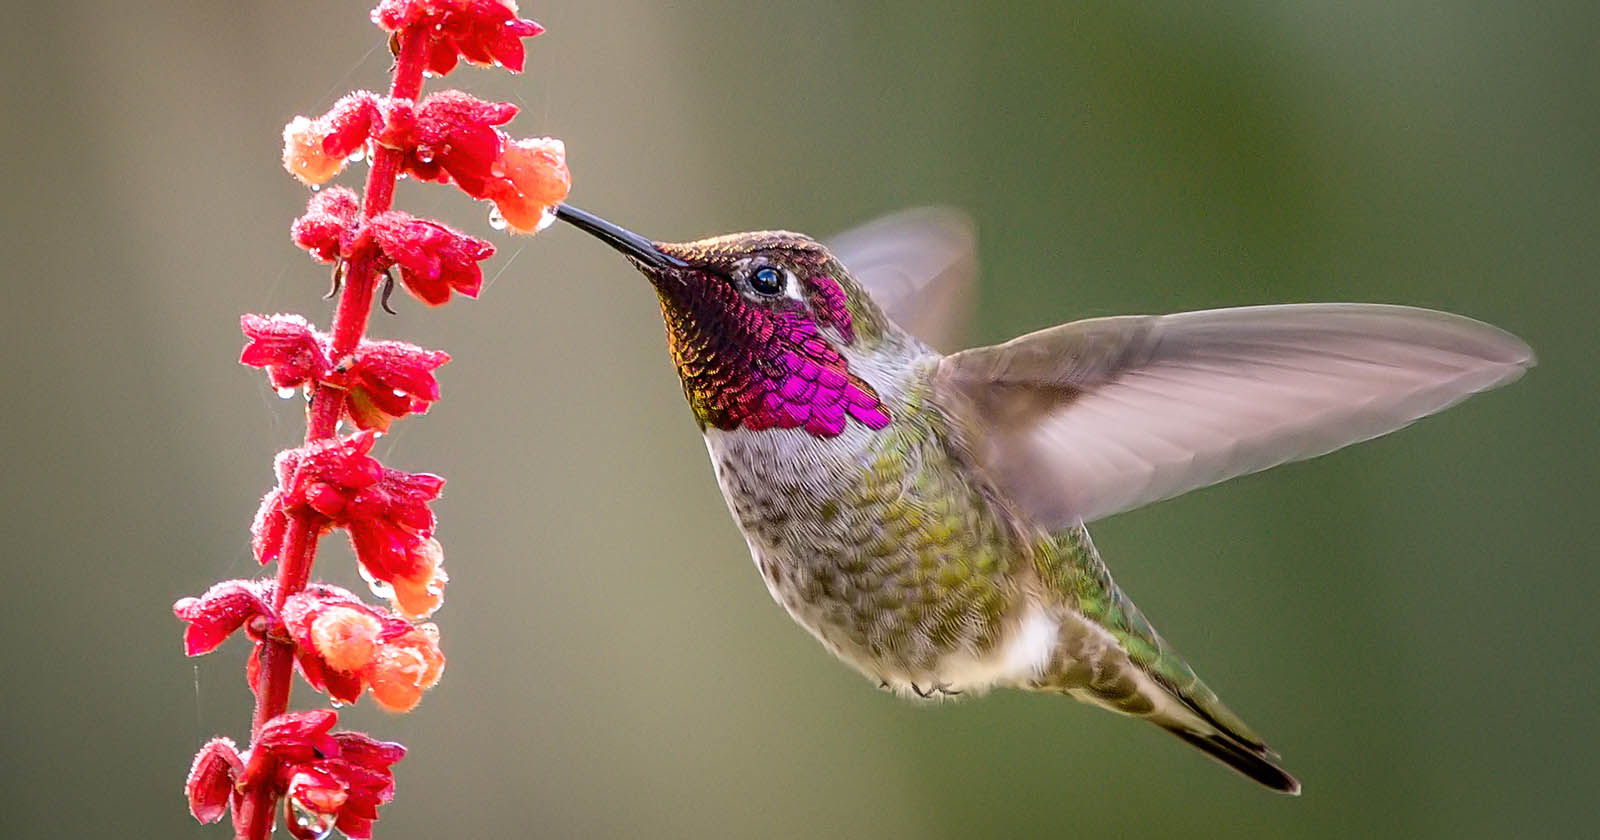 hummingbird fast shutter speed photo featured